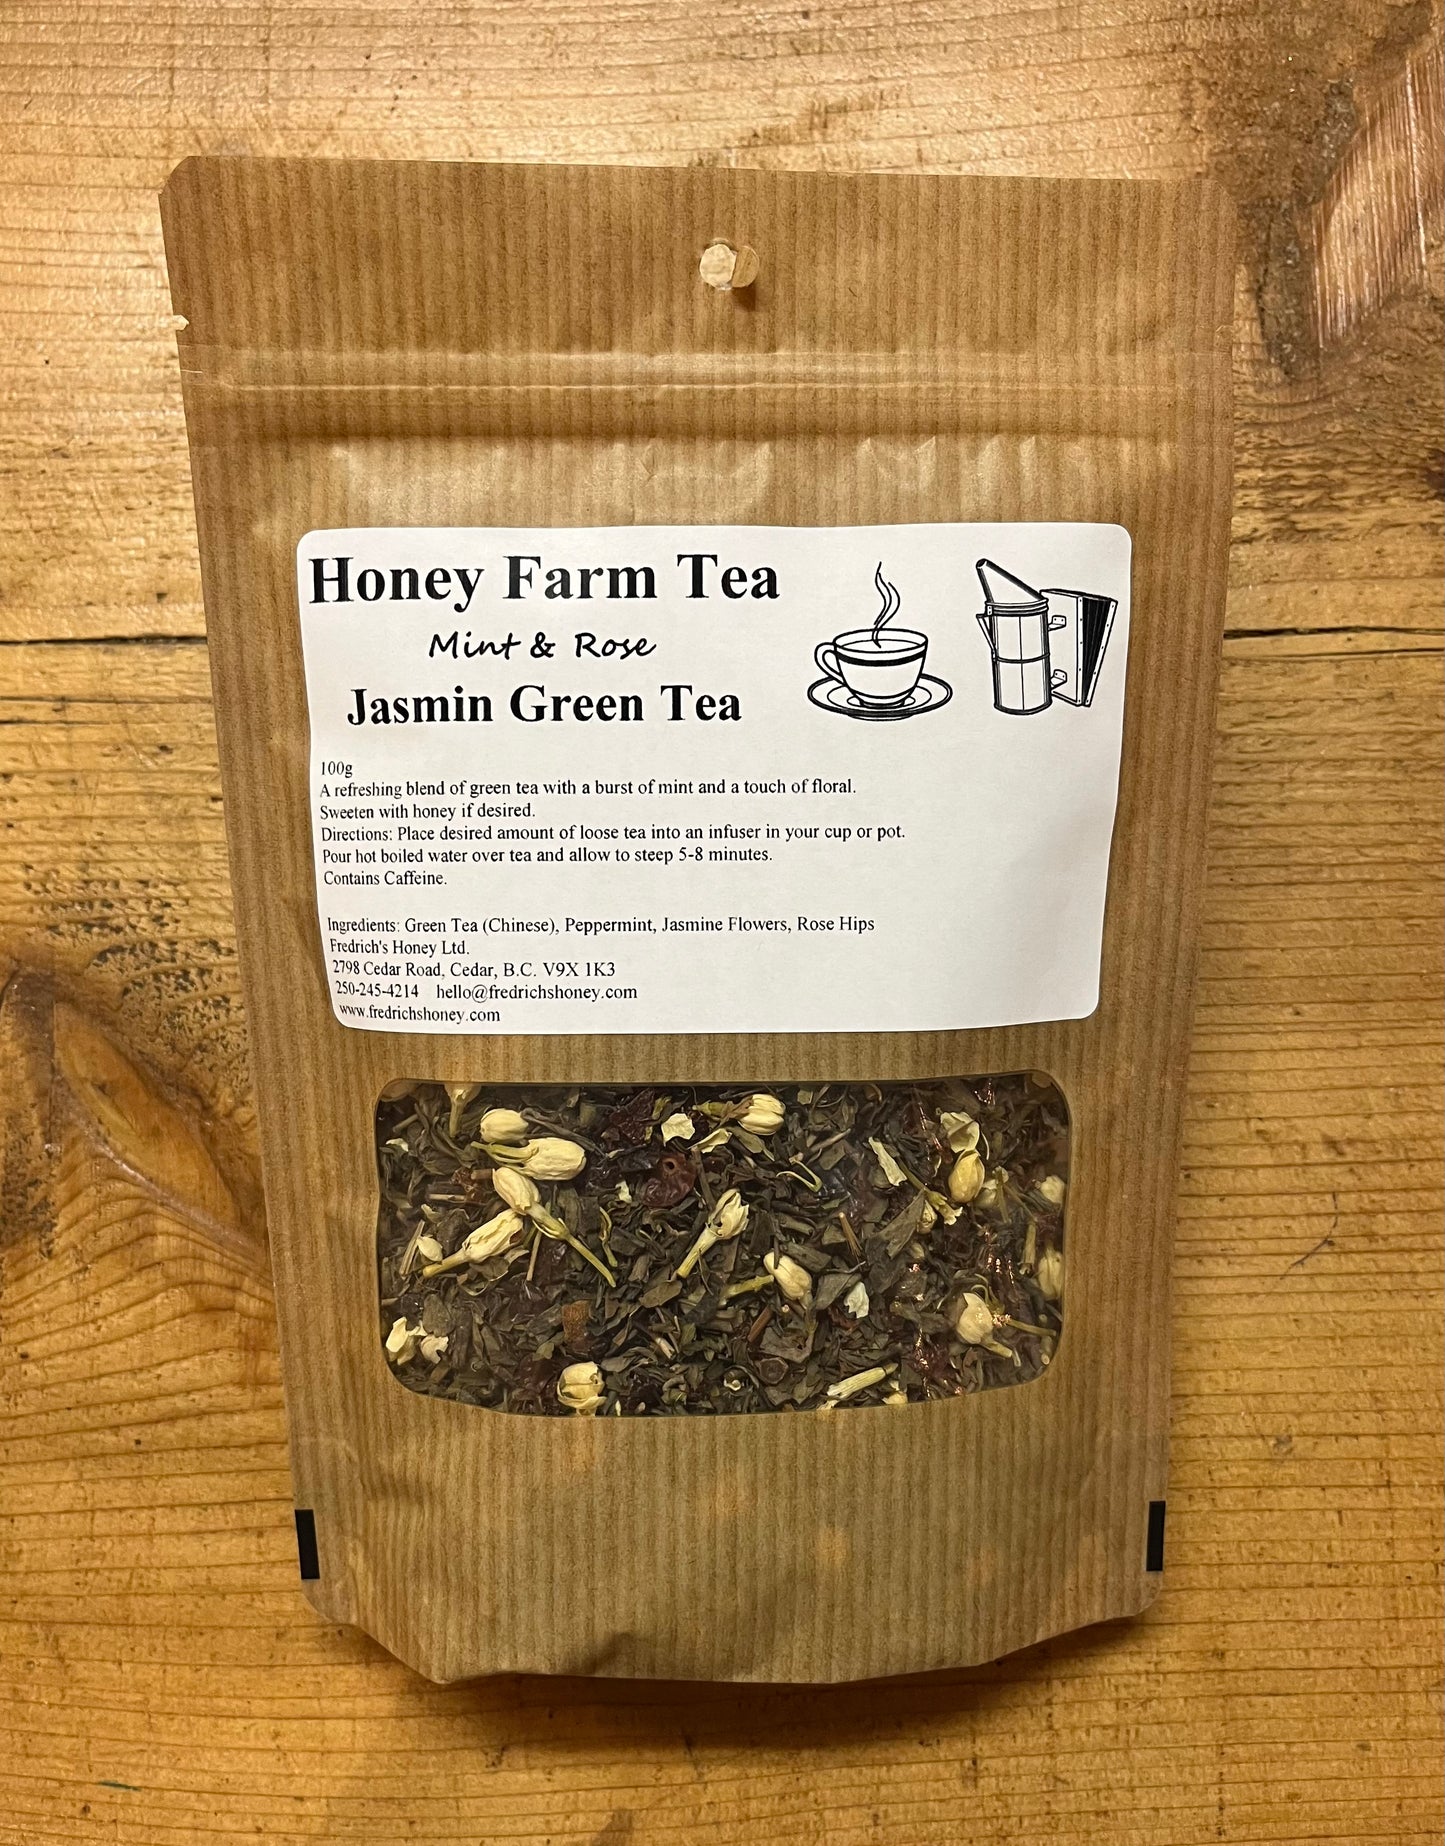 Jasmine Green Tea with Mint & Rose